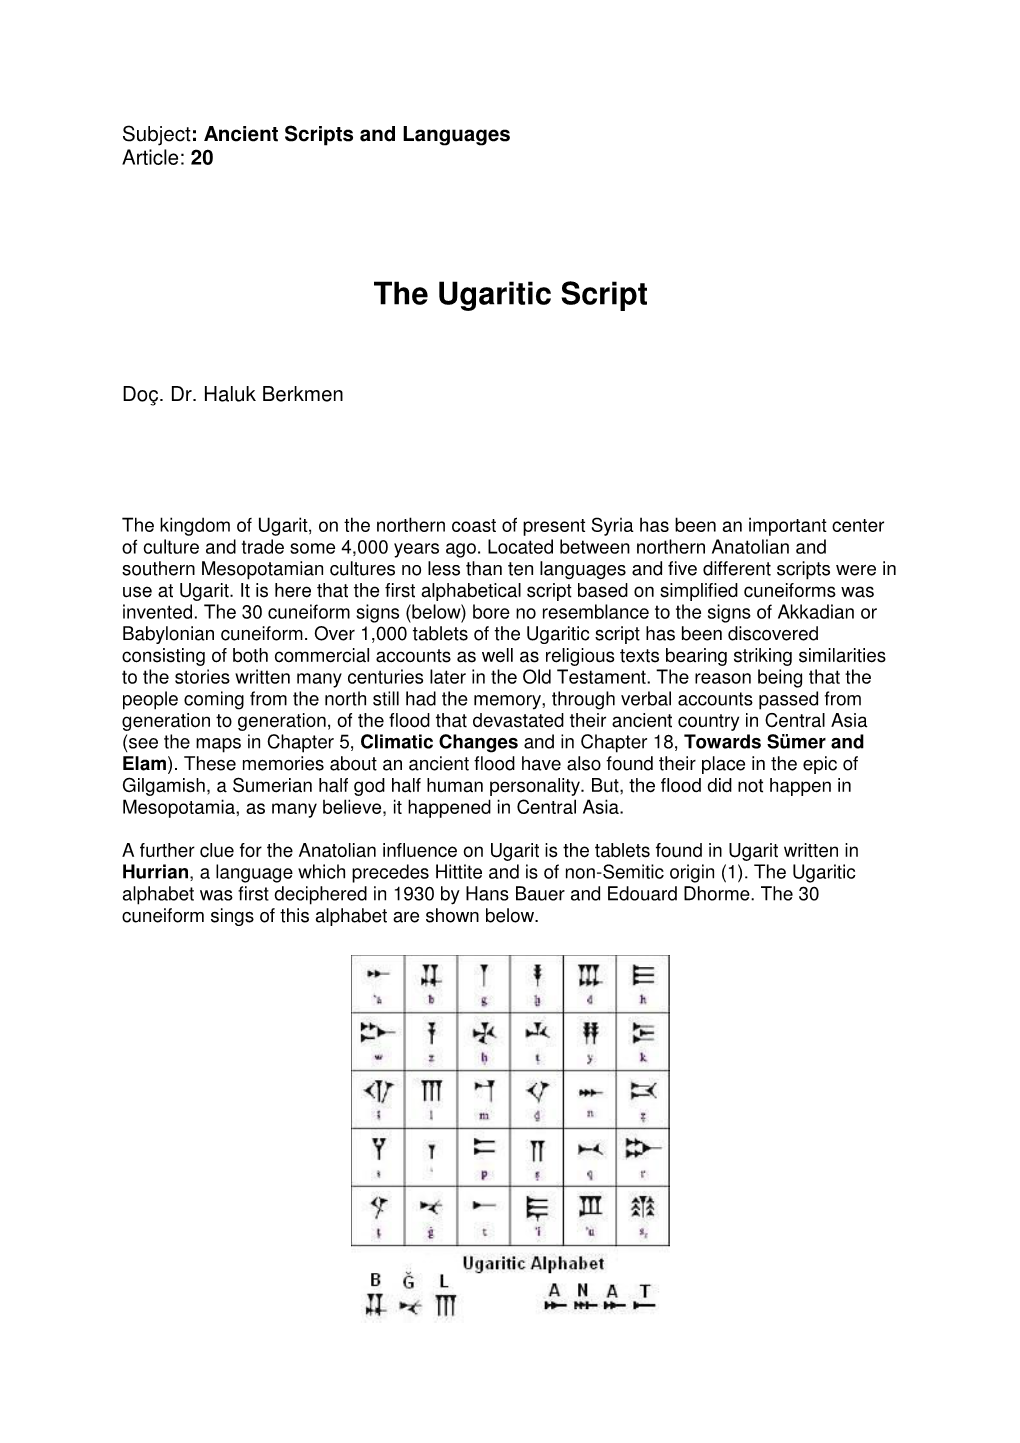 The Ugaritic Script